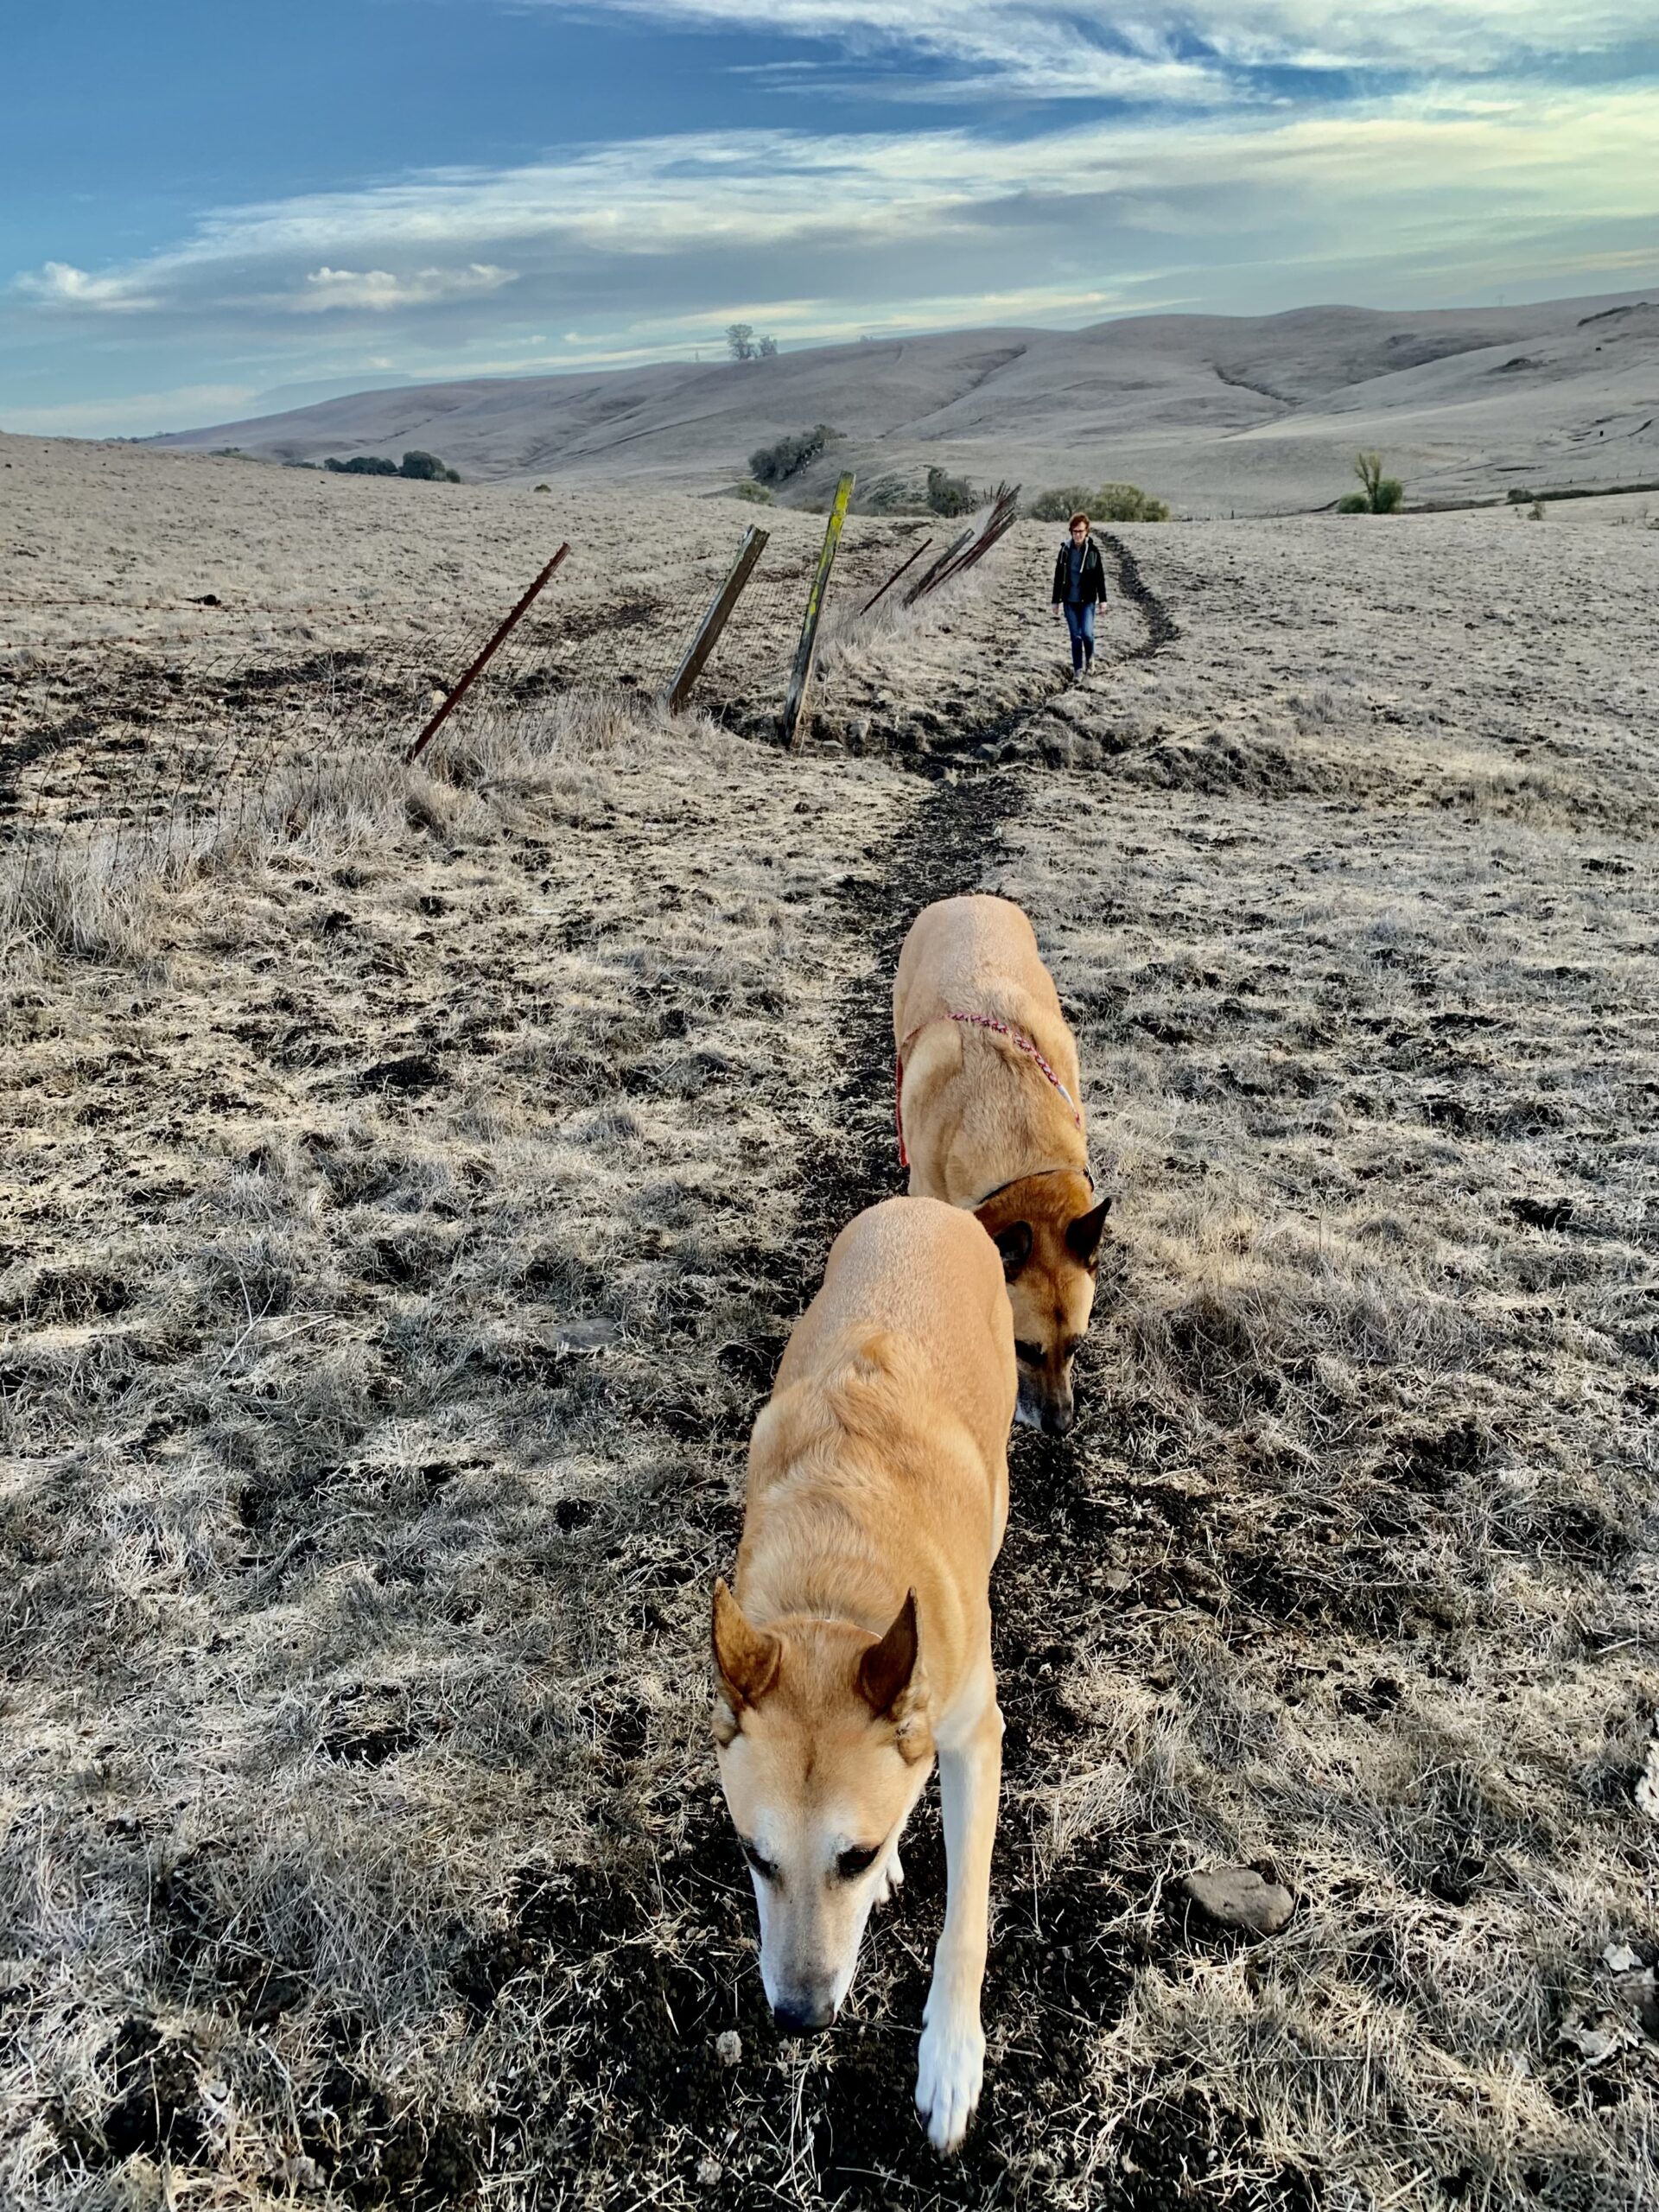 Three dogs walking in a dry field near a fence.